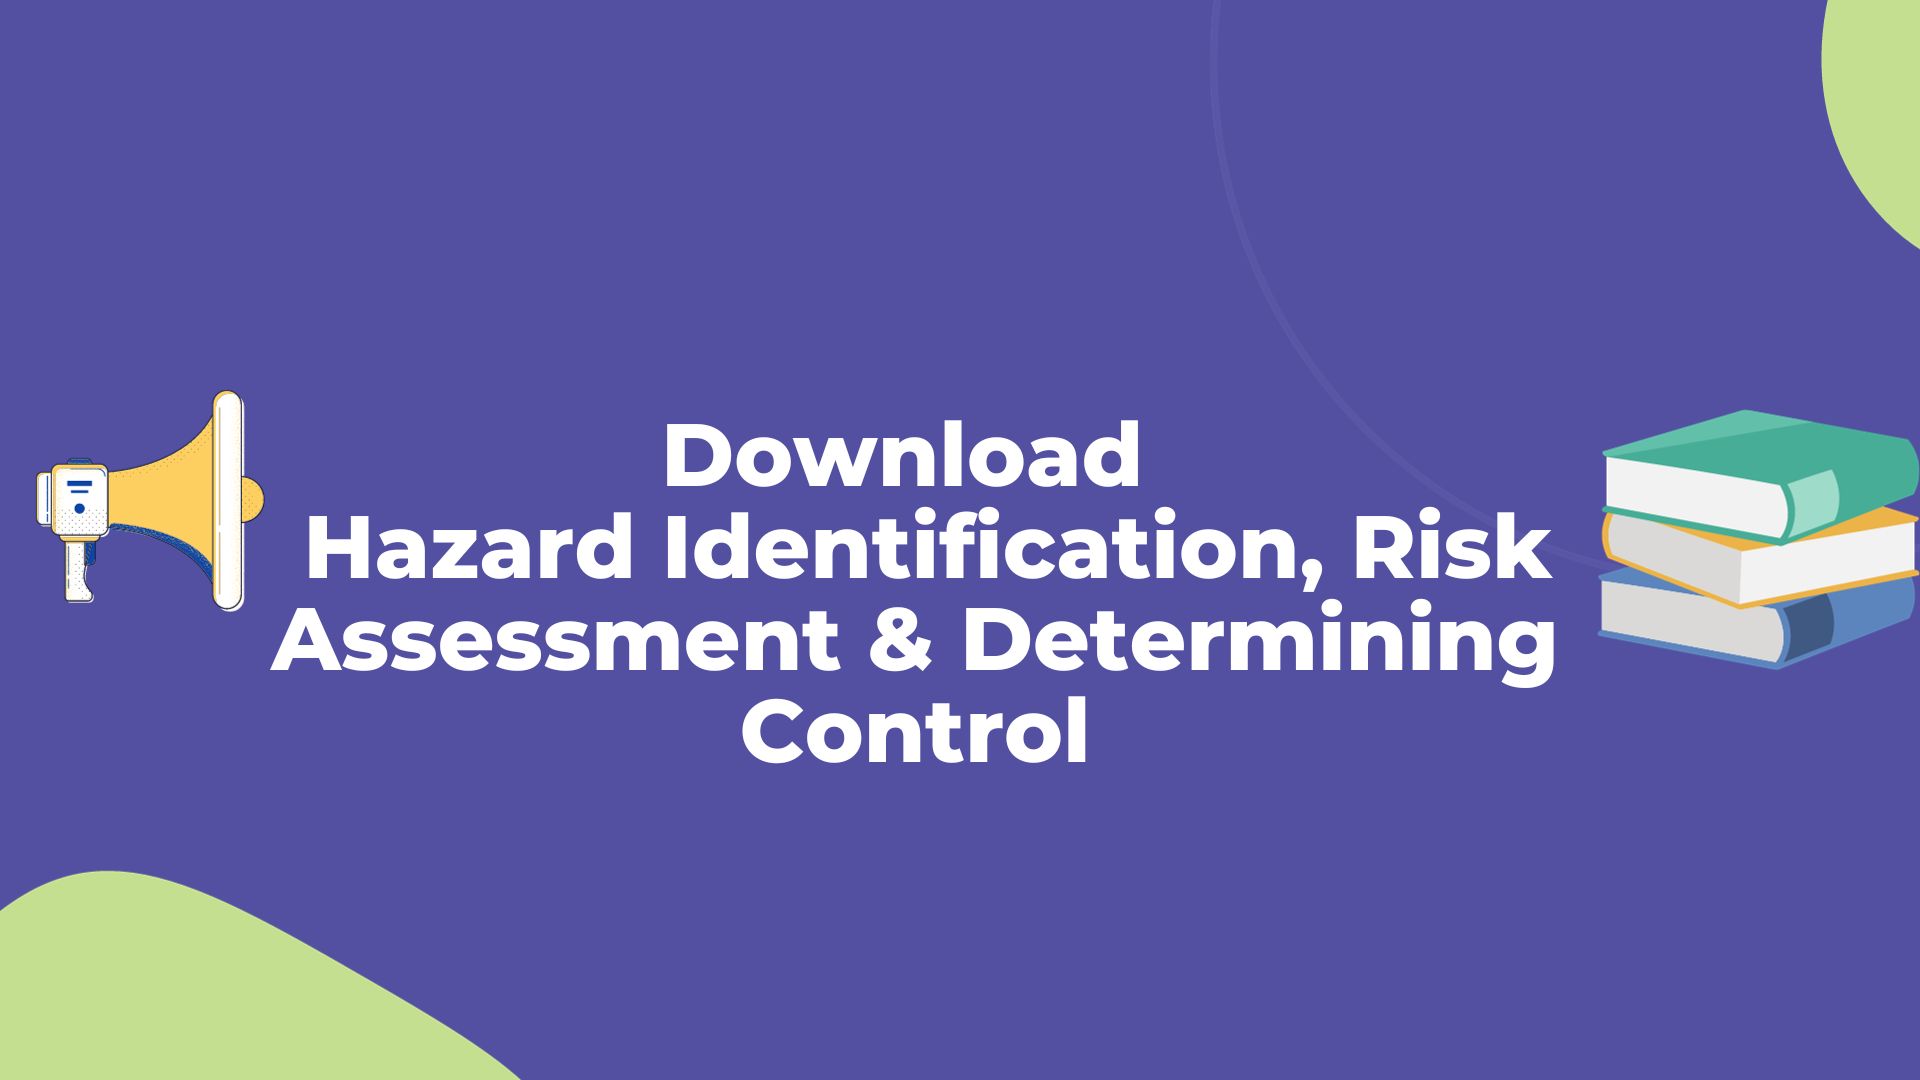 Download Hazard Identification, Risk Assessment & Determining Control 